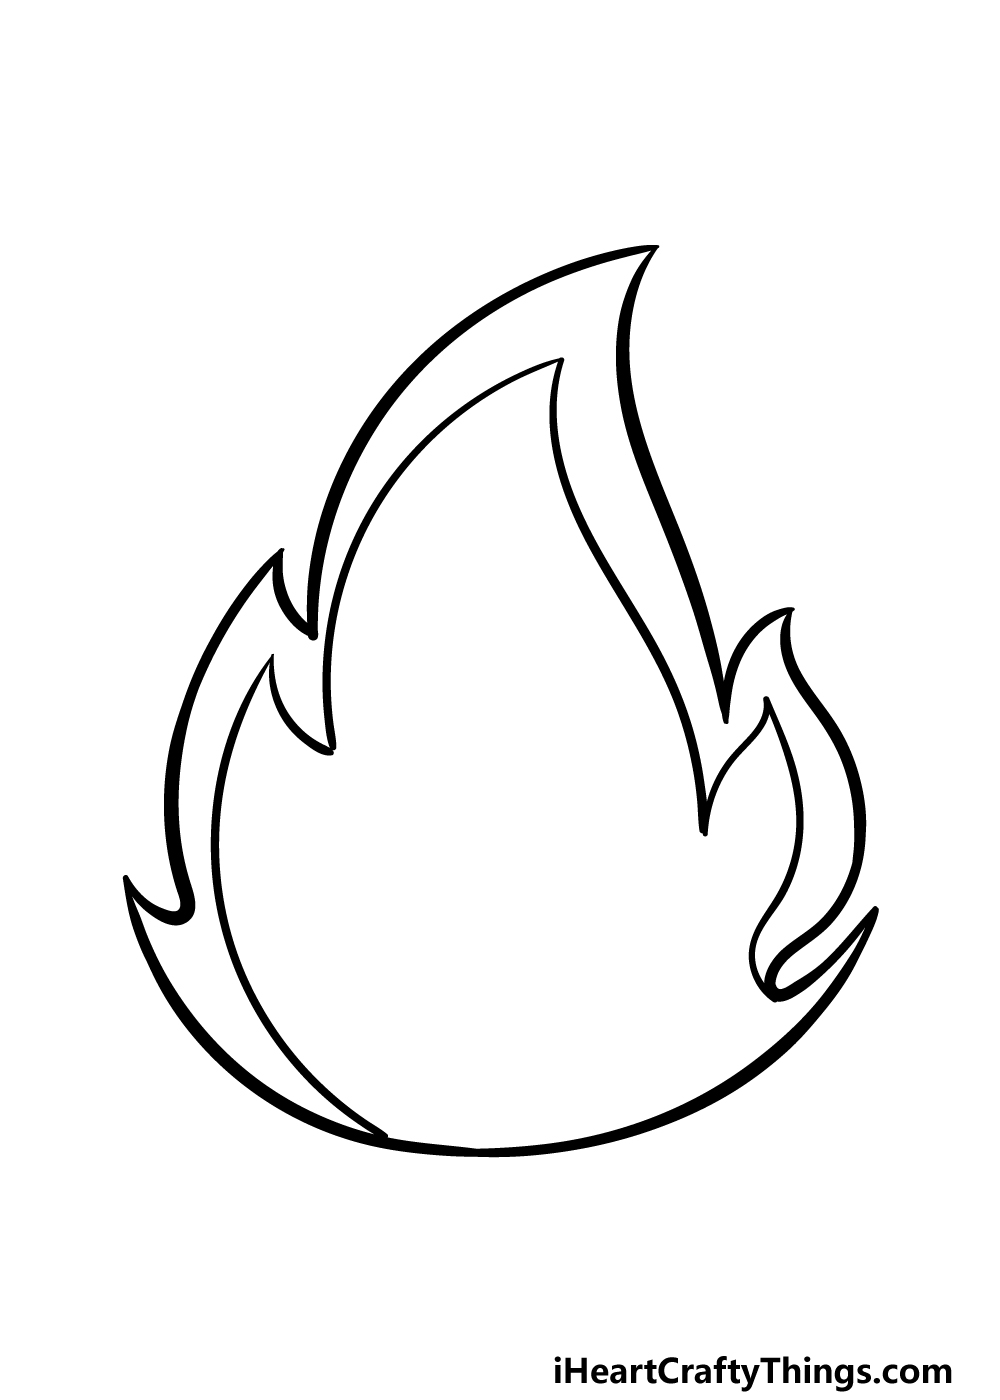 how to draw a cartoon flame step 3